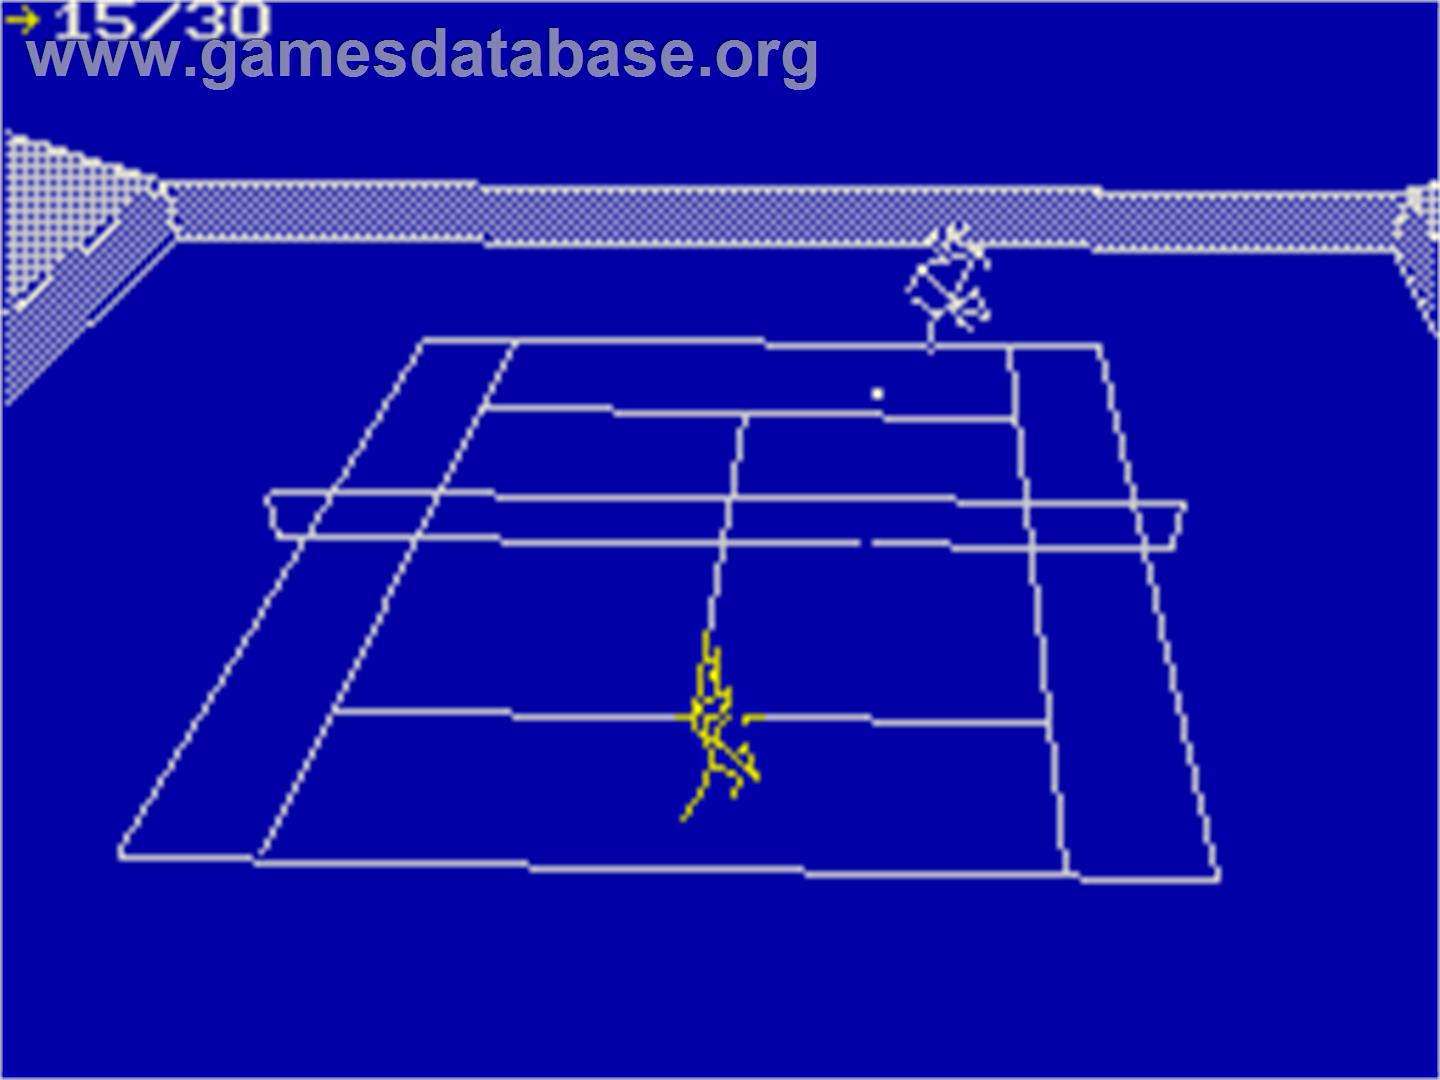 International 3D Tennis - Sinclair ZX Spectrum - Artwork - In Game